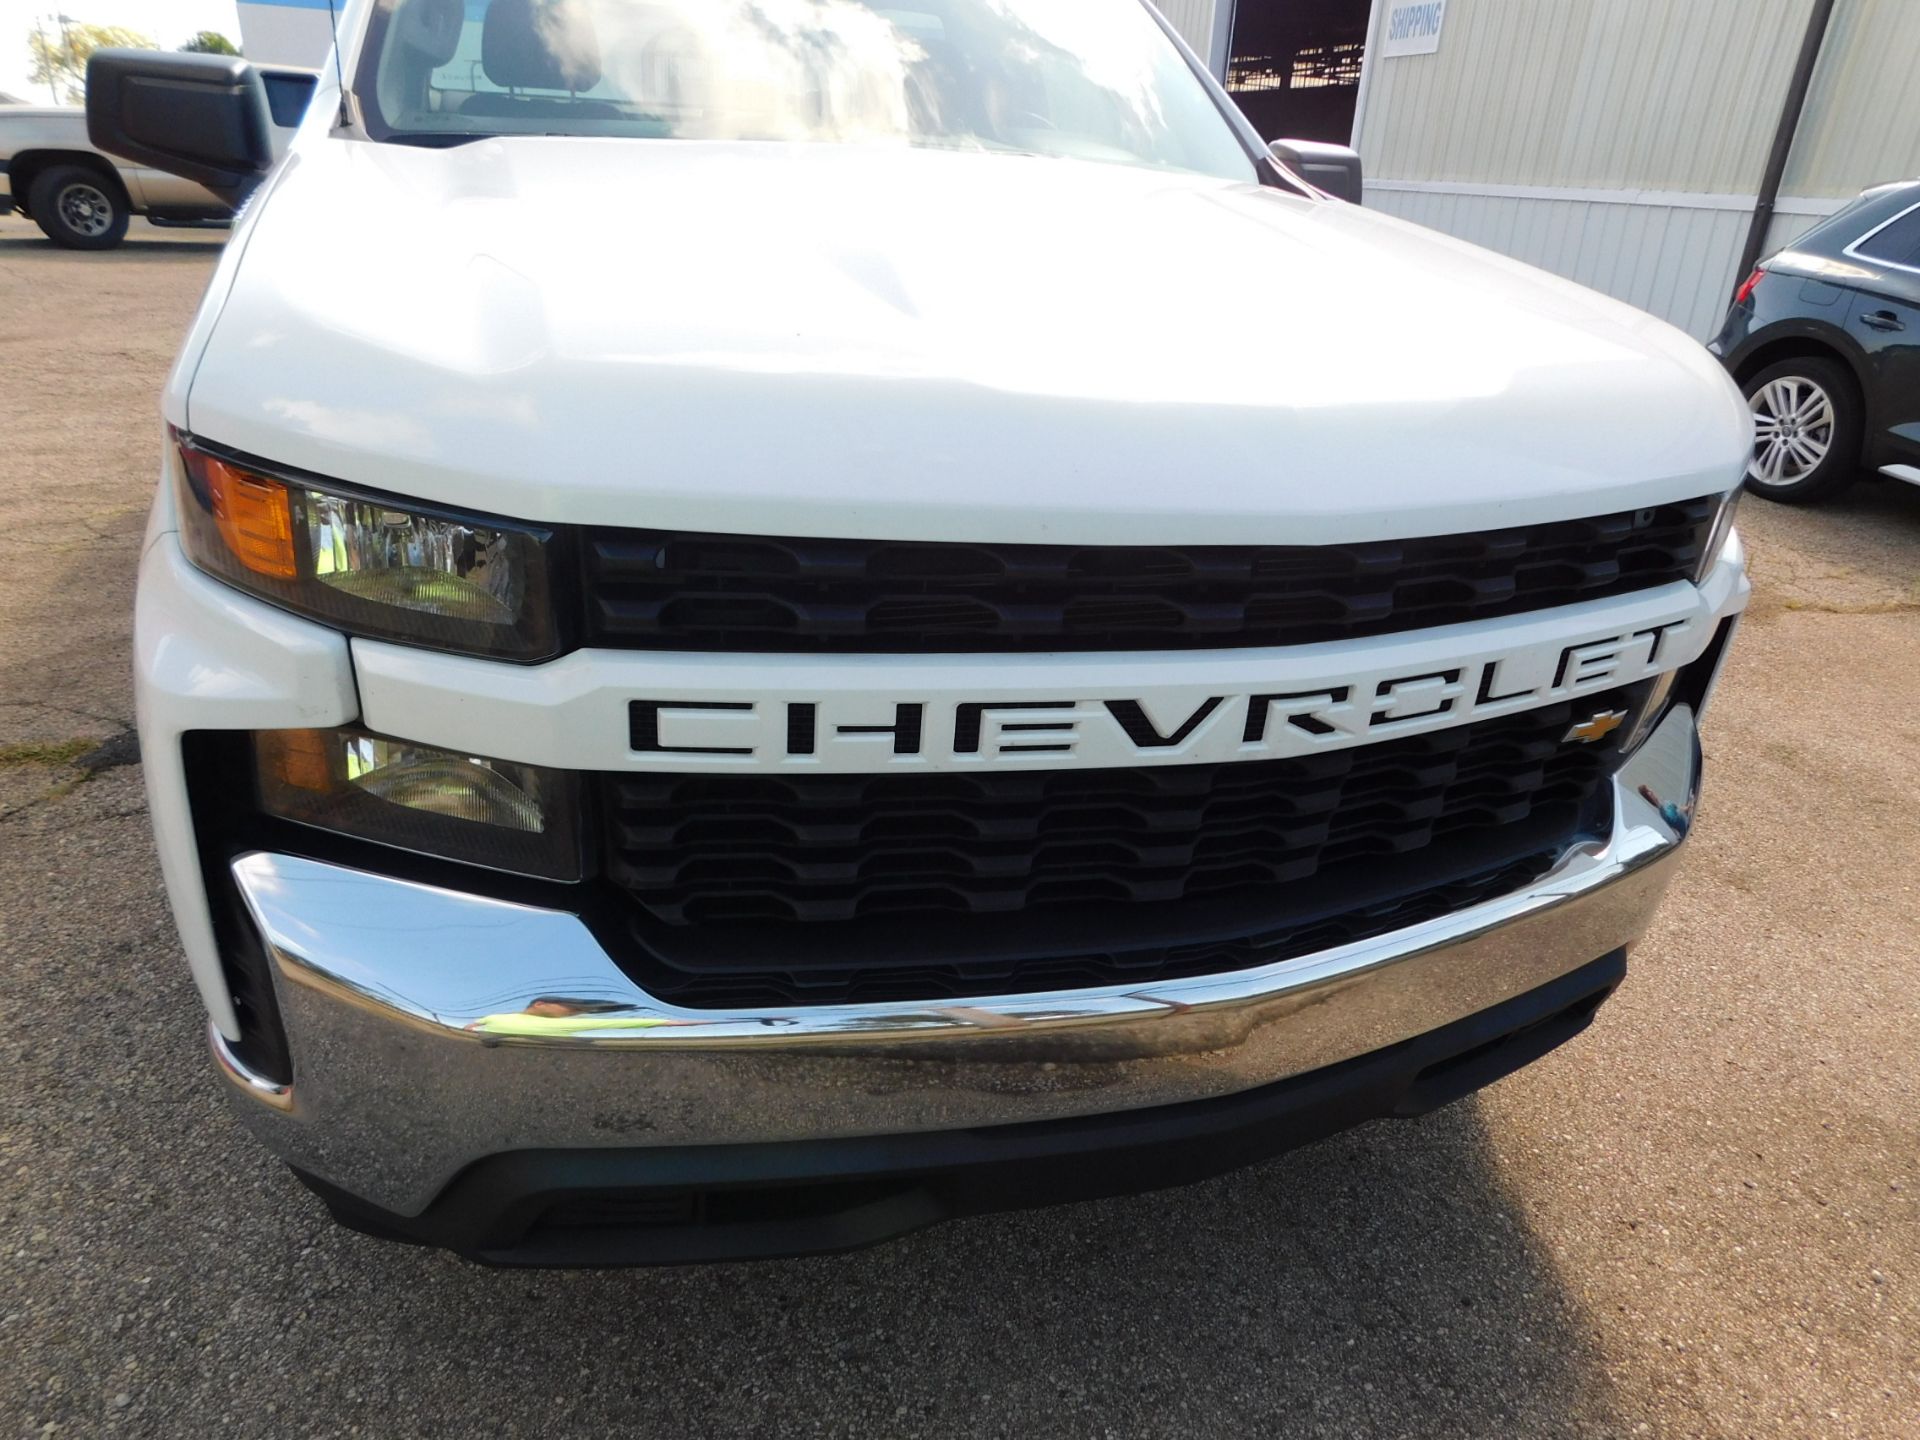 2019 Chevrolet Silverado Model 1500 Pick-Up Truck, VIN 3GCNWAEF2KG233058, Regular Cab, Auto, 8’ Bed, - Image 3 of 29